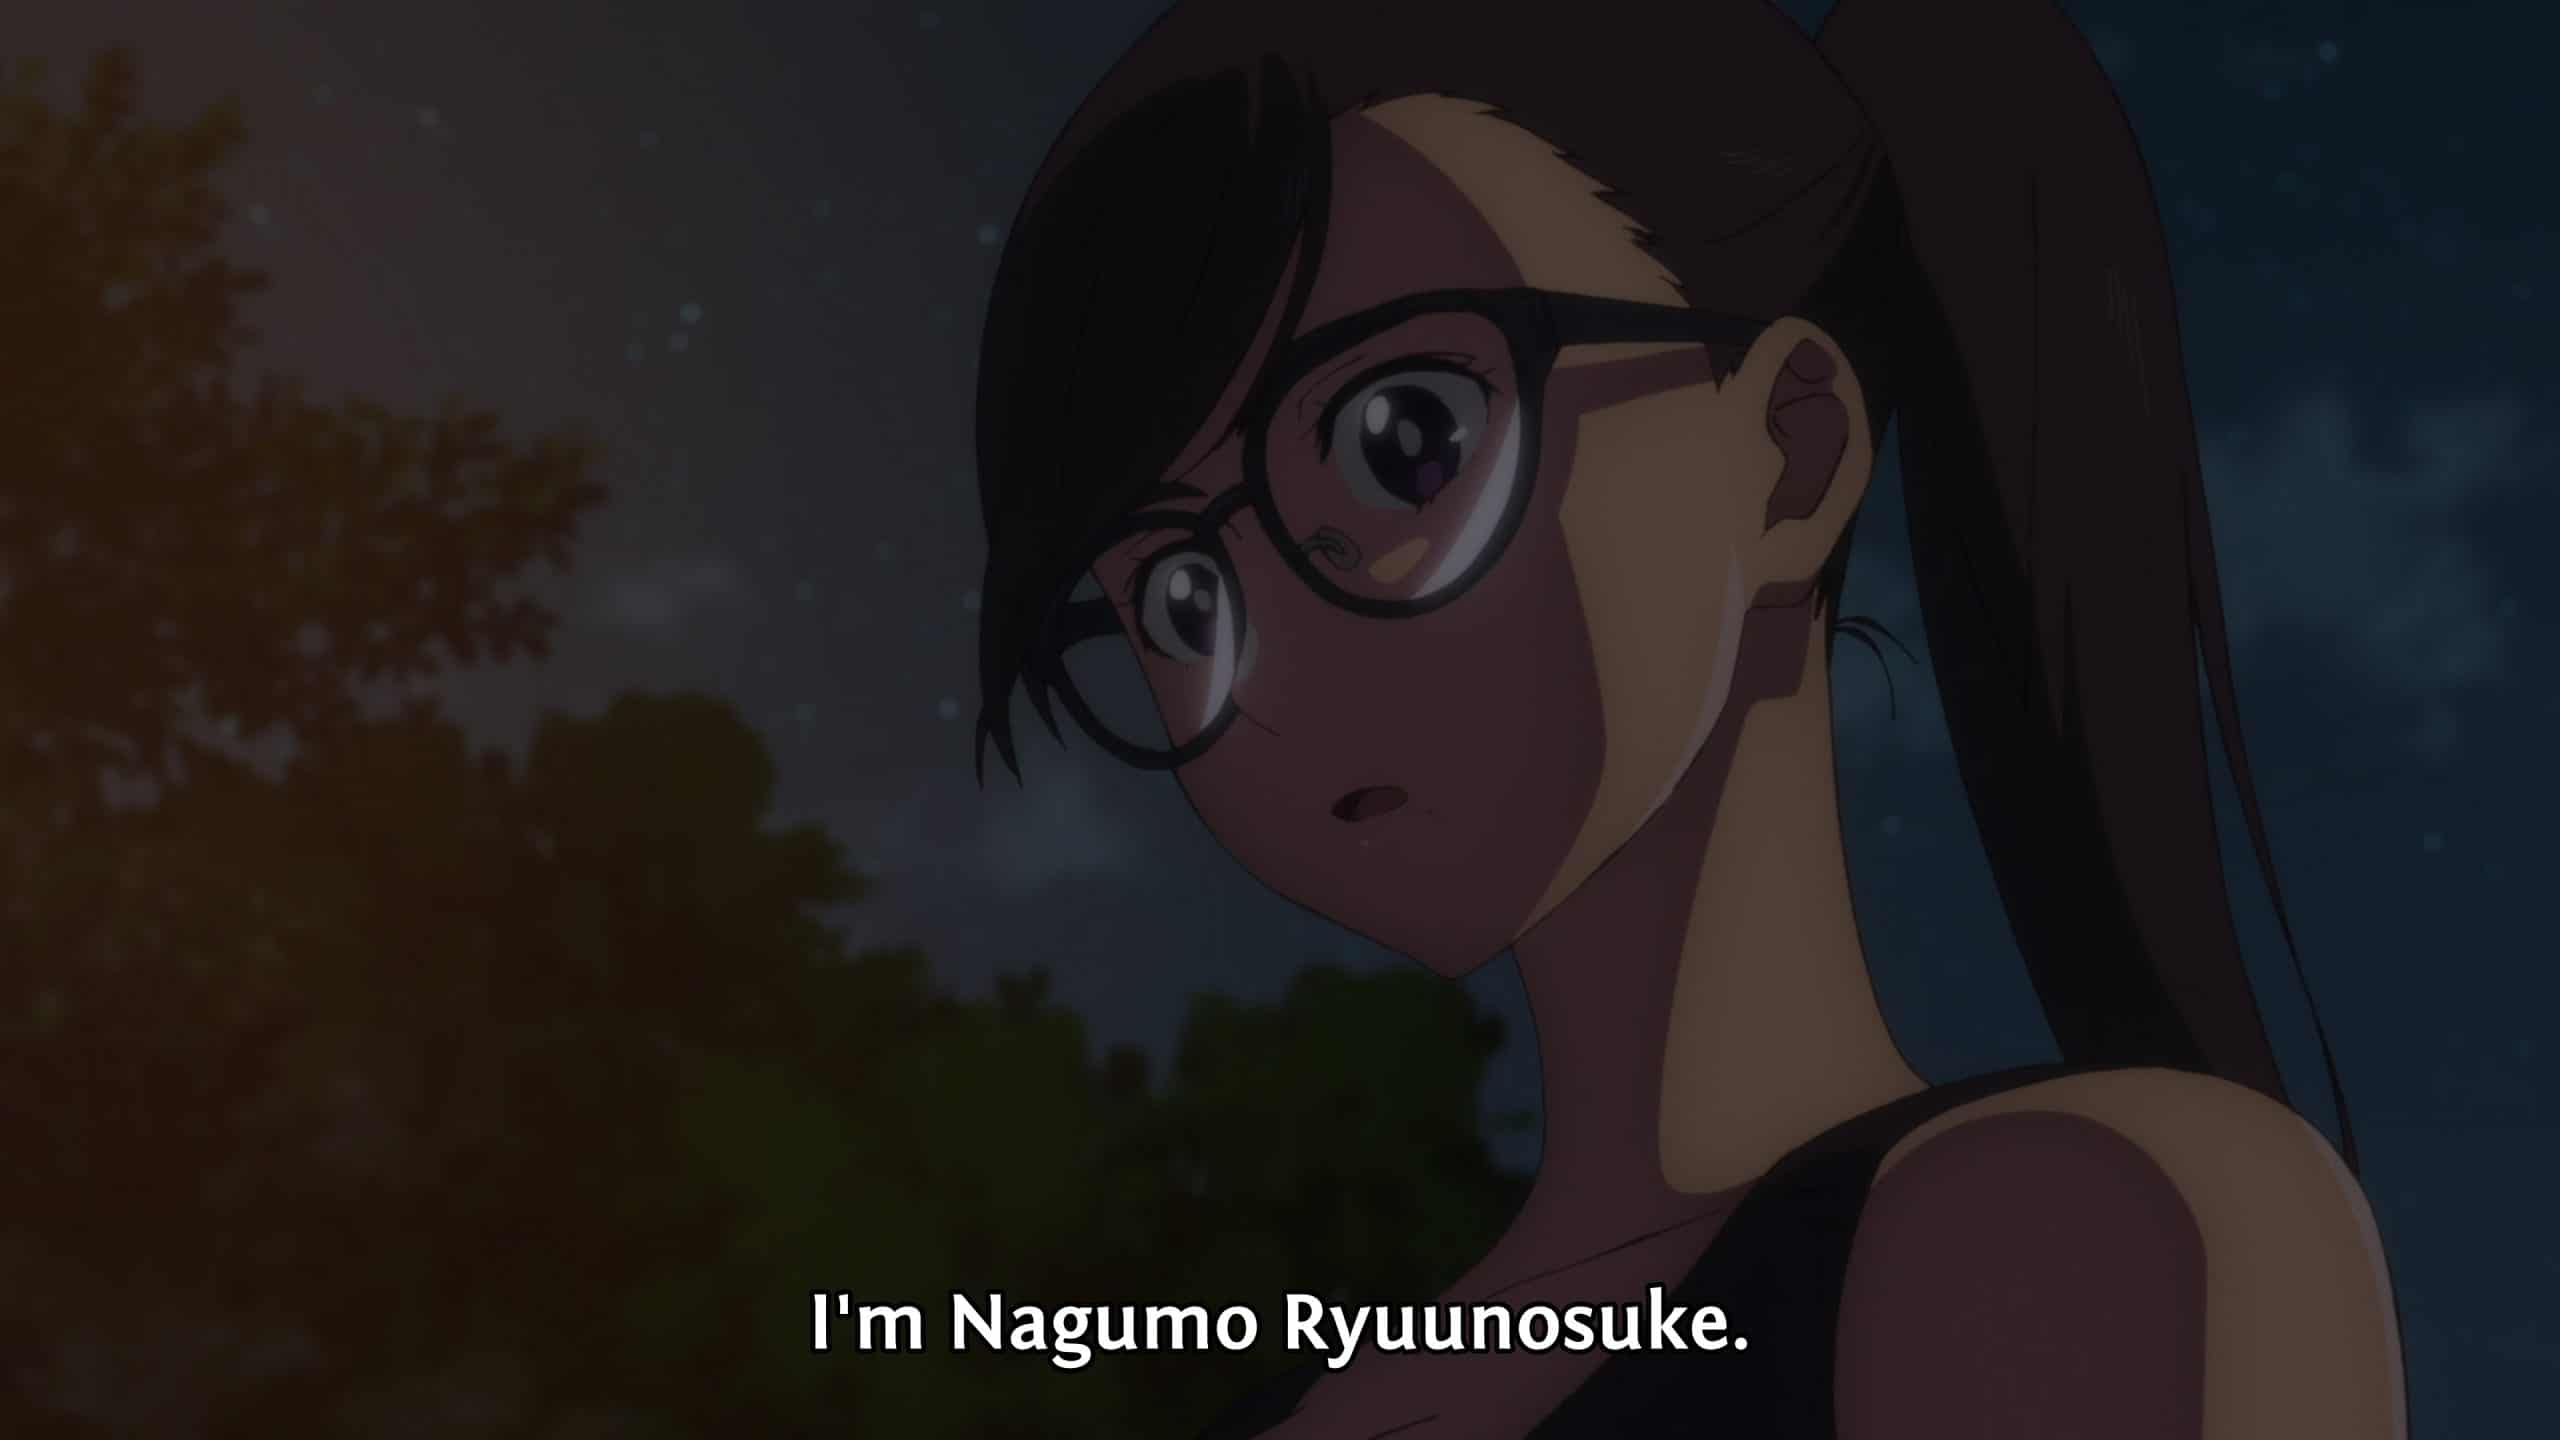 Nagumo Ryuunosuke (Yoko Hikasa) properly introducing herself to Shinpei